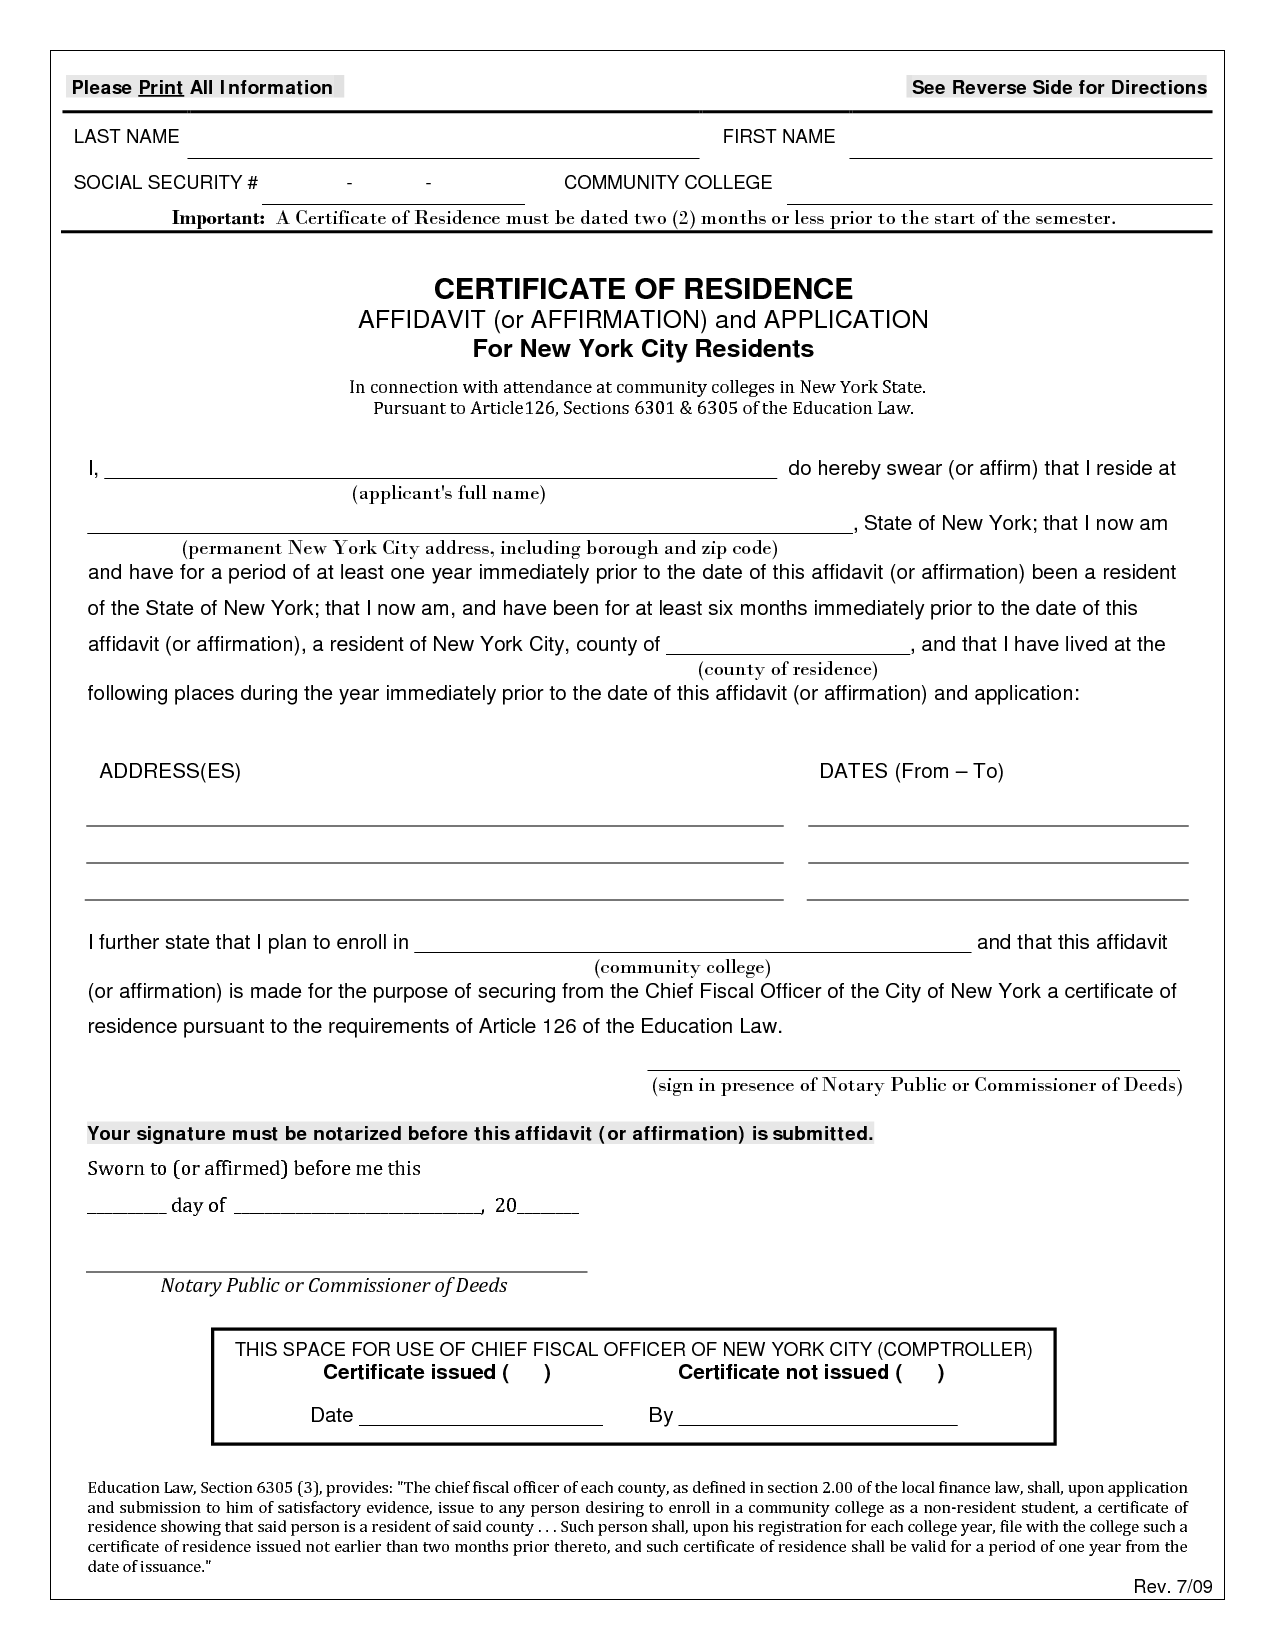 residence-affidavit-template